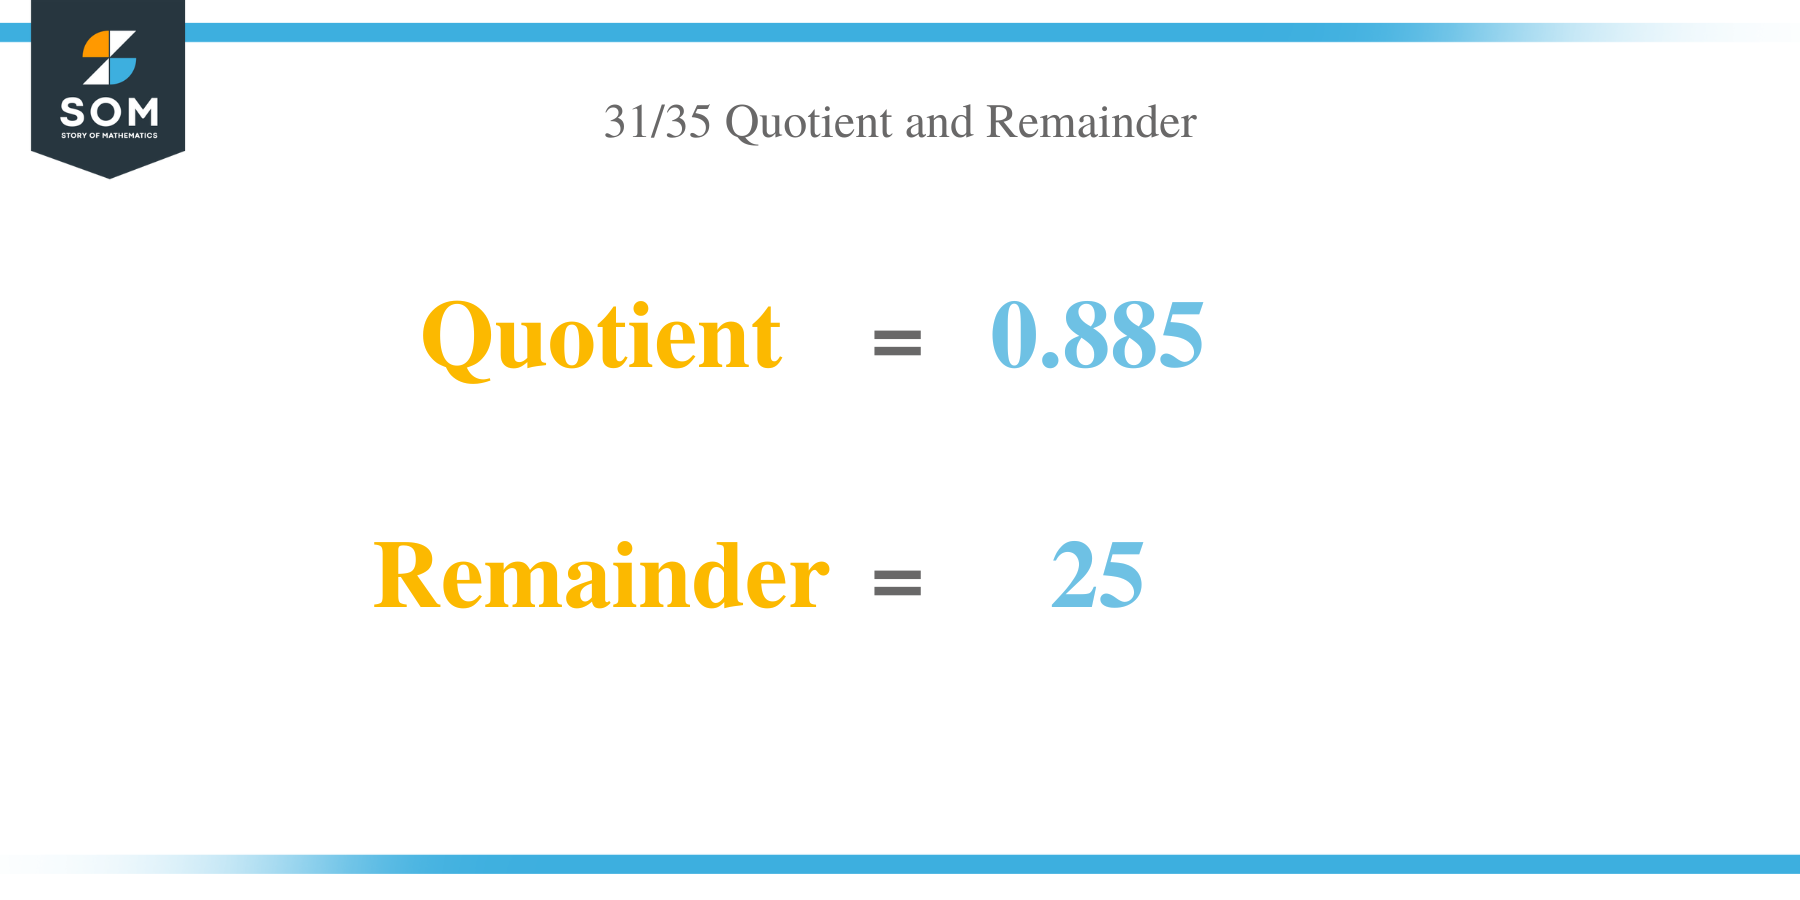 Quotient and Remainder of 31 per 35